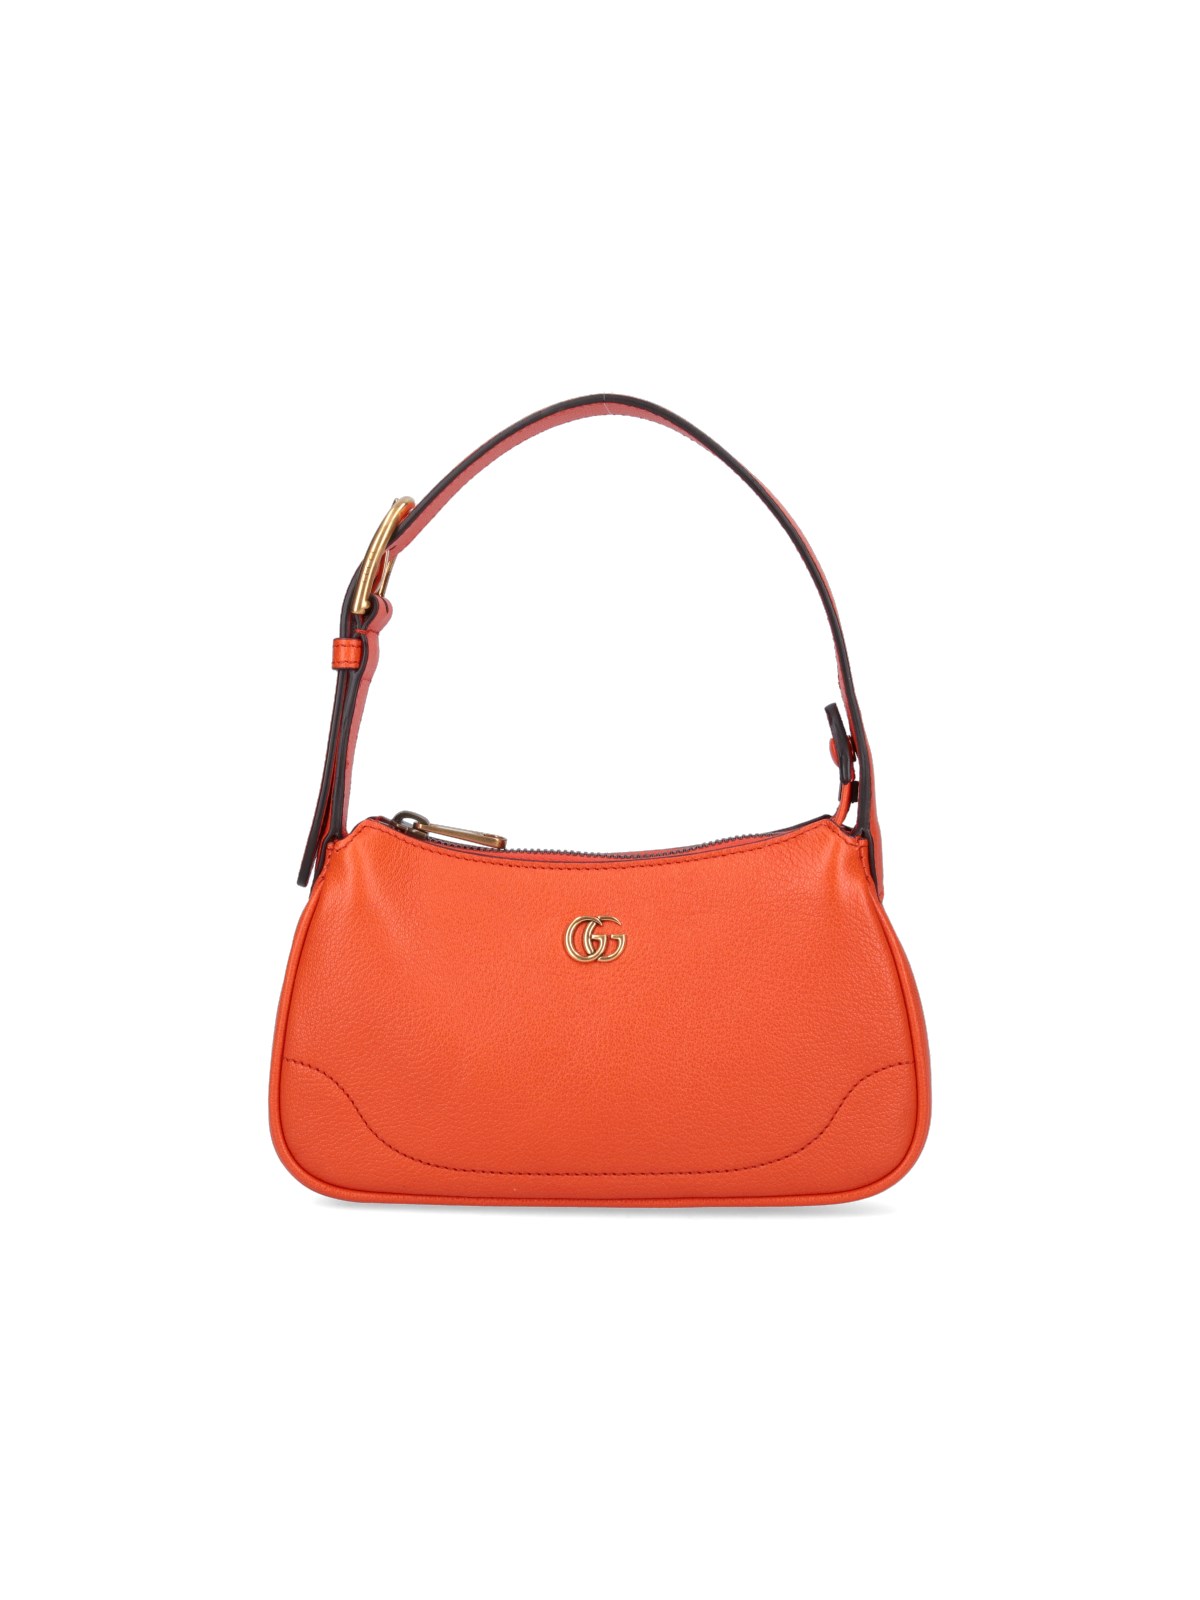 Gucci "aphrodite Double G" Shoulder Bag In Orange